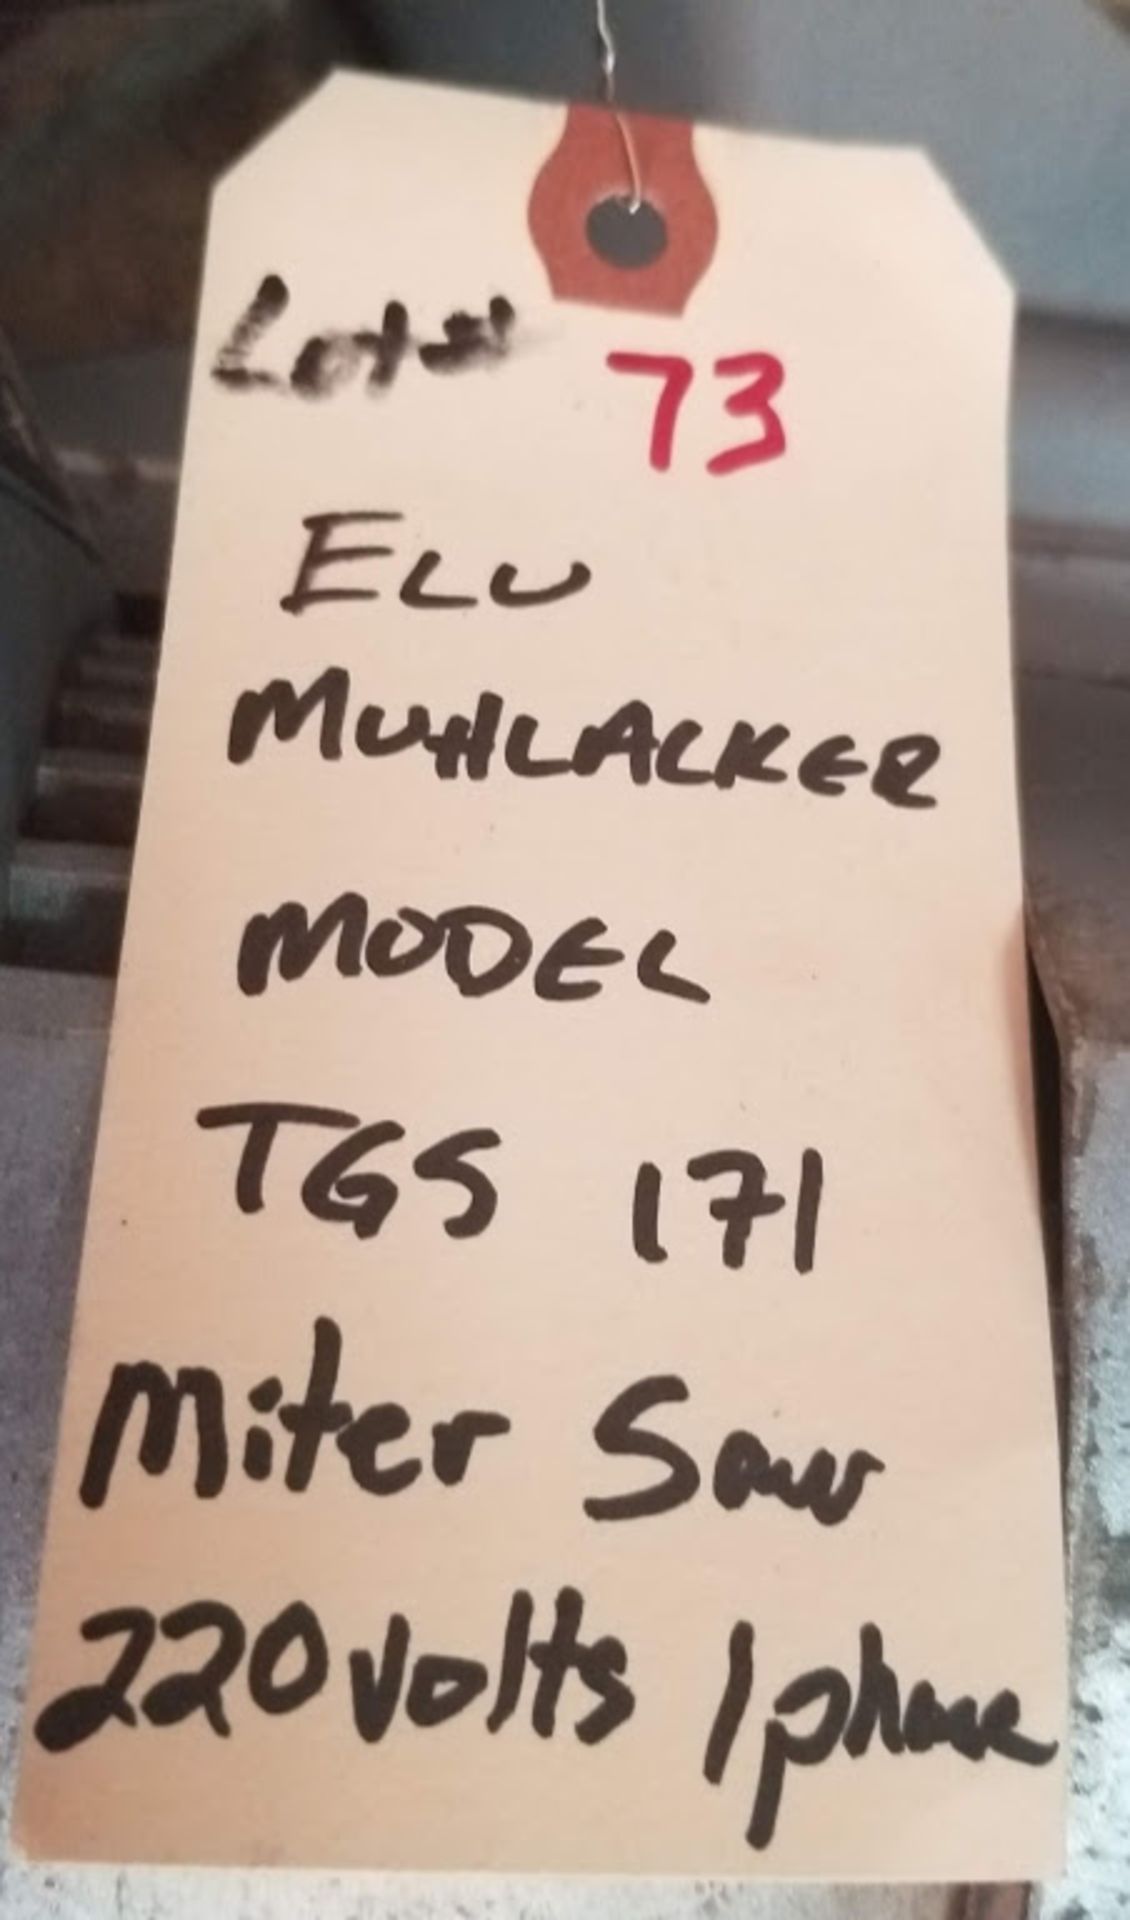 ELU Muhlacker Miter Saw Model: TGS 171 220 Volts 1Phase - Image 3 of 3